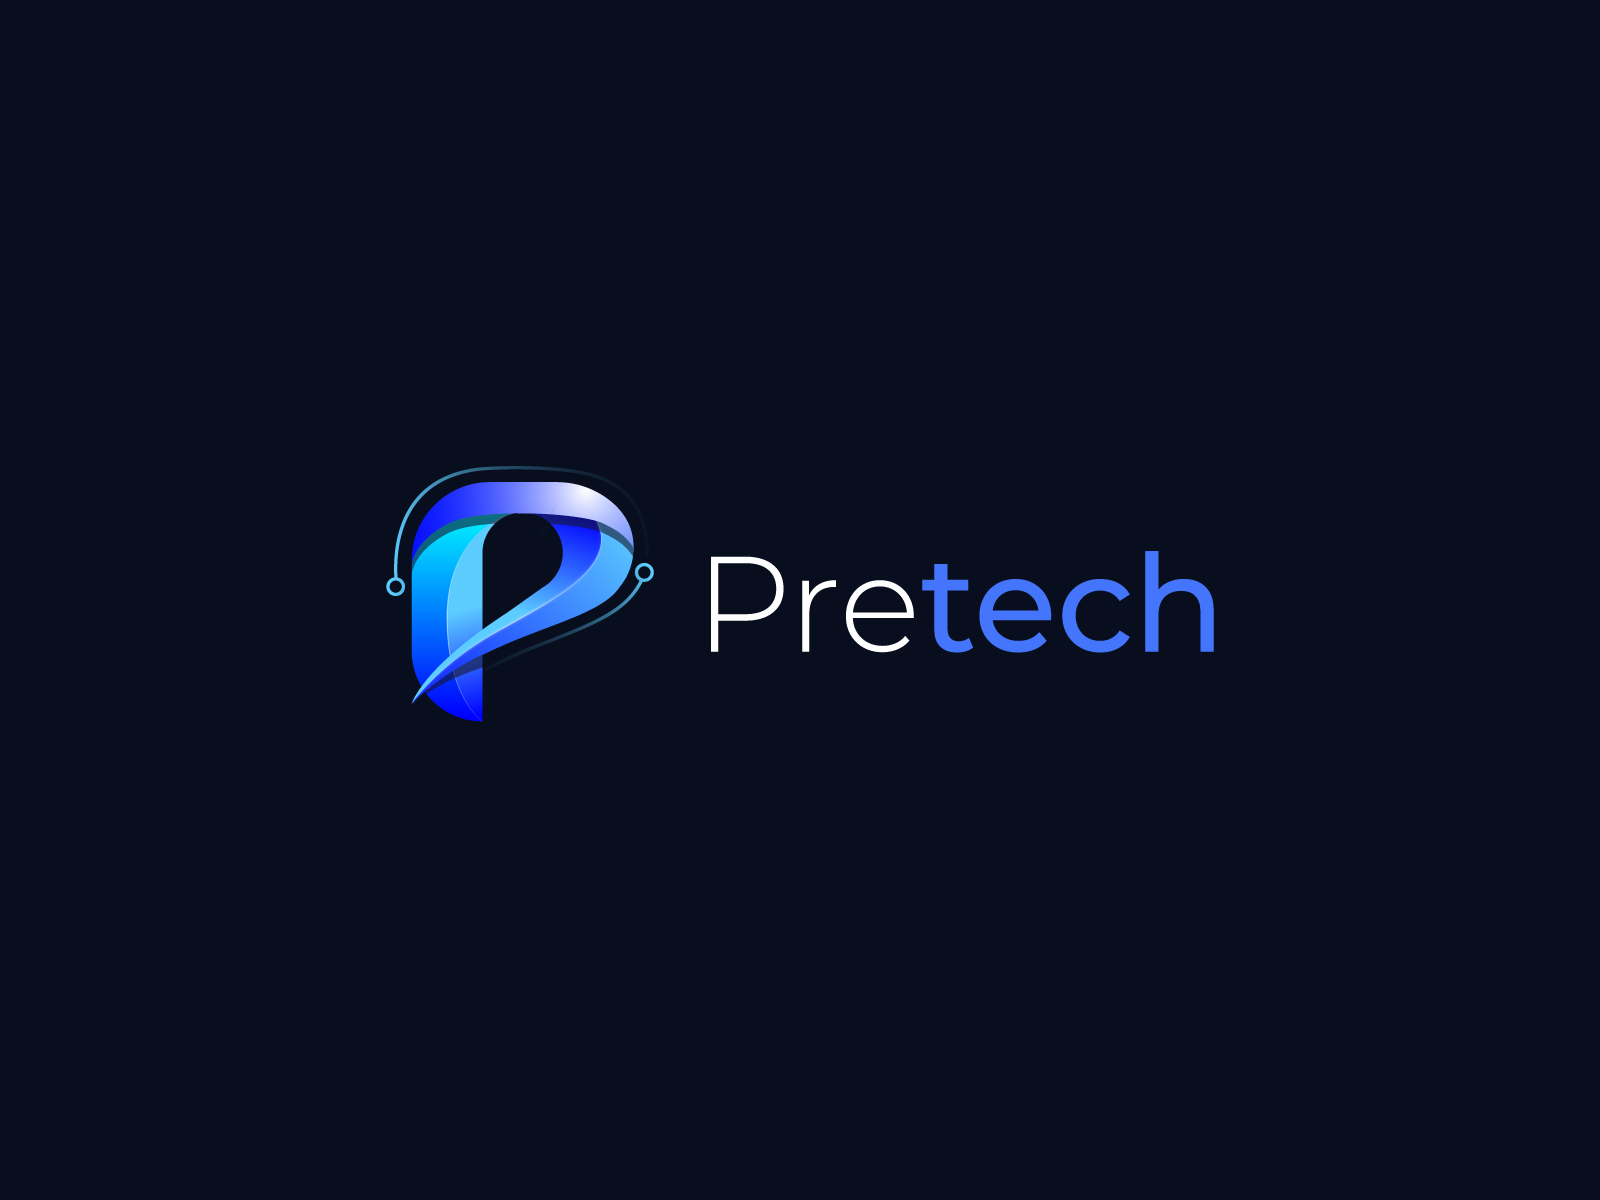 Letter P + Tech Icon Modern Technology Logo by Md Humayun Kabir on Dribbble